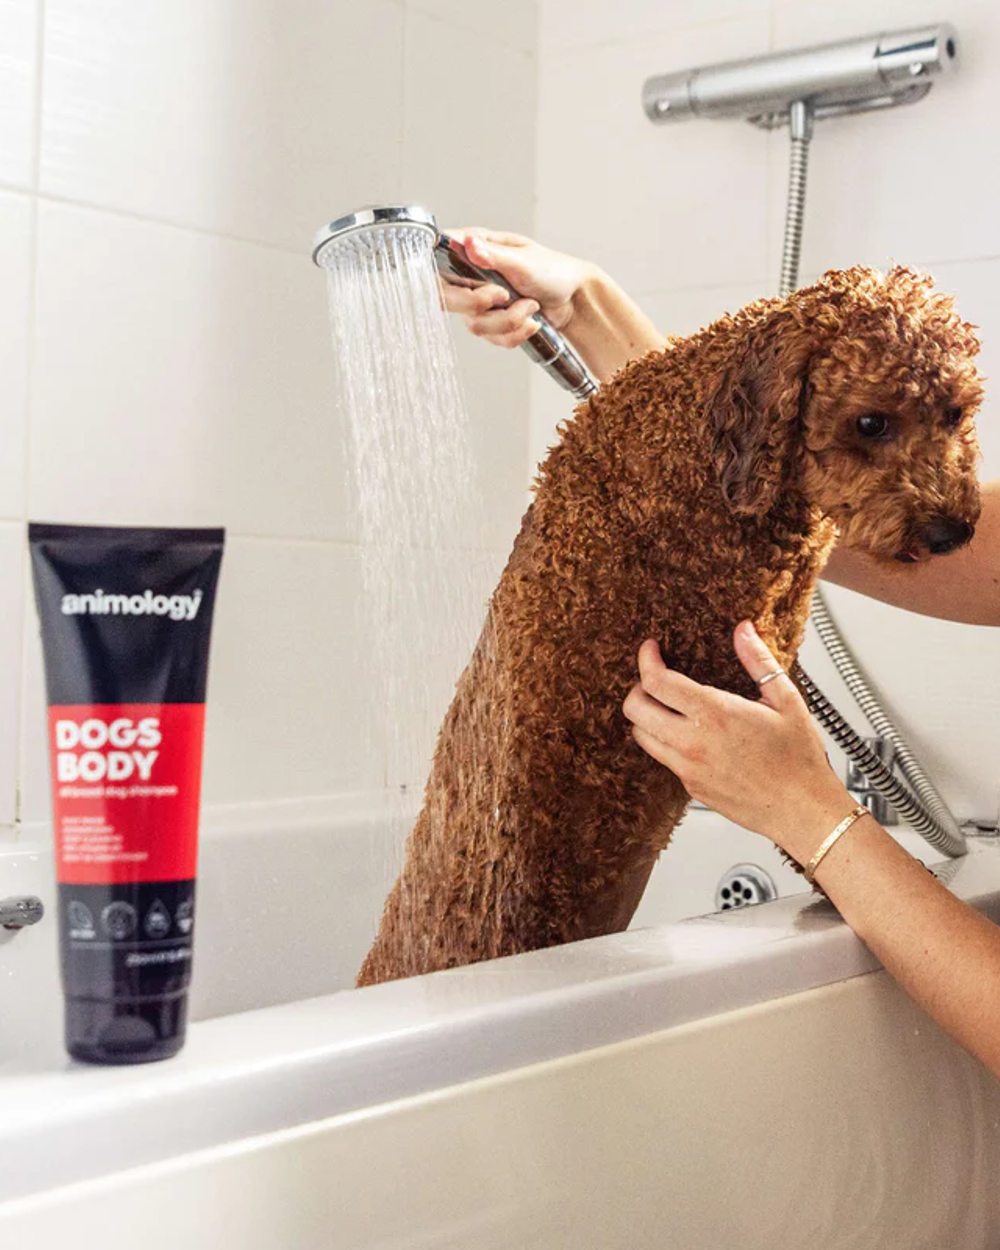 Animology Dogs Body Shampoo 250ml with dog in background